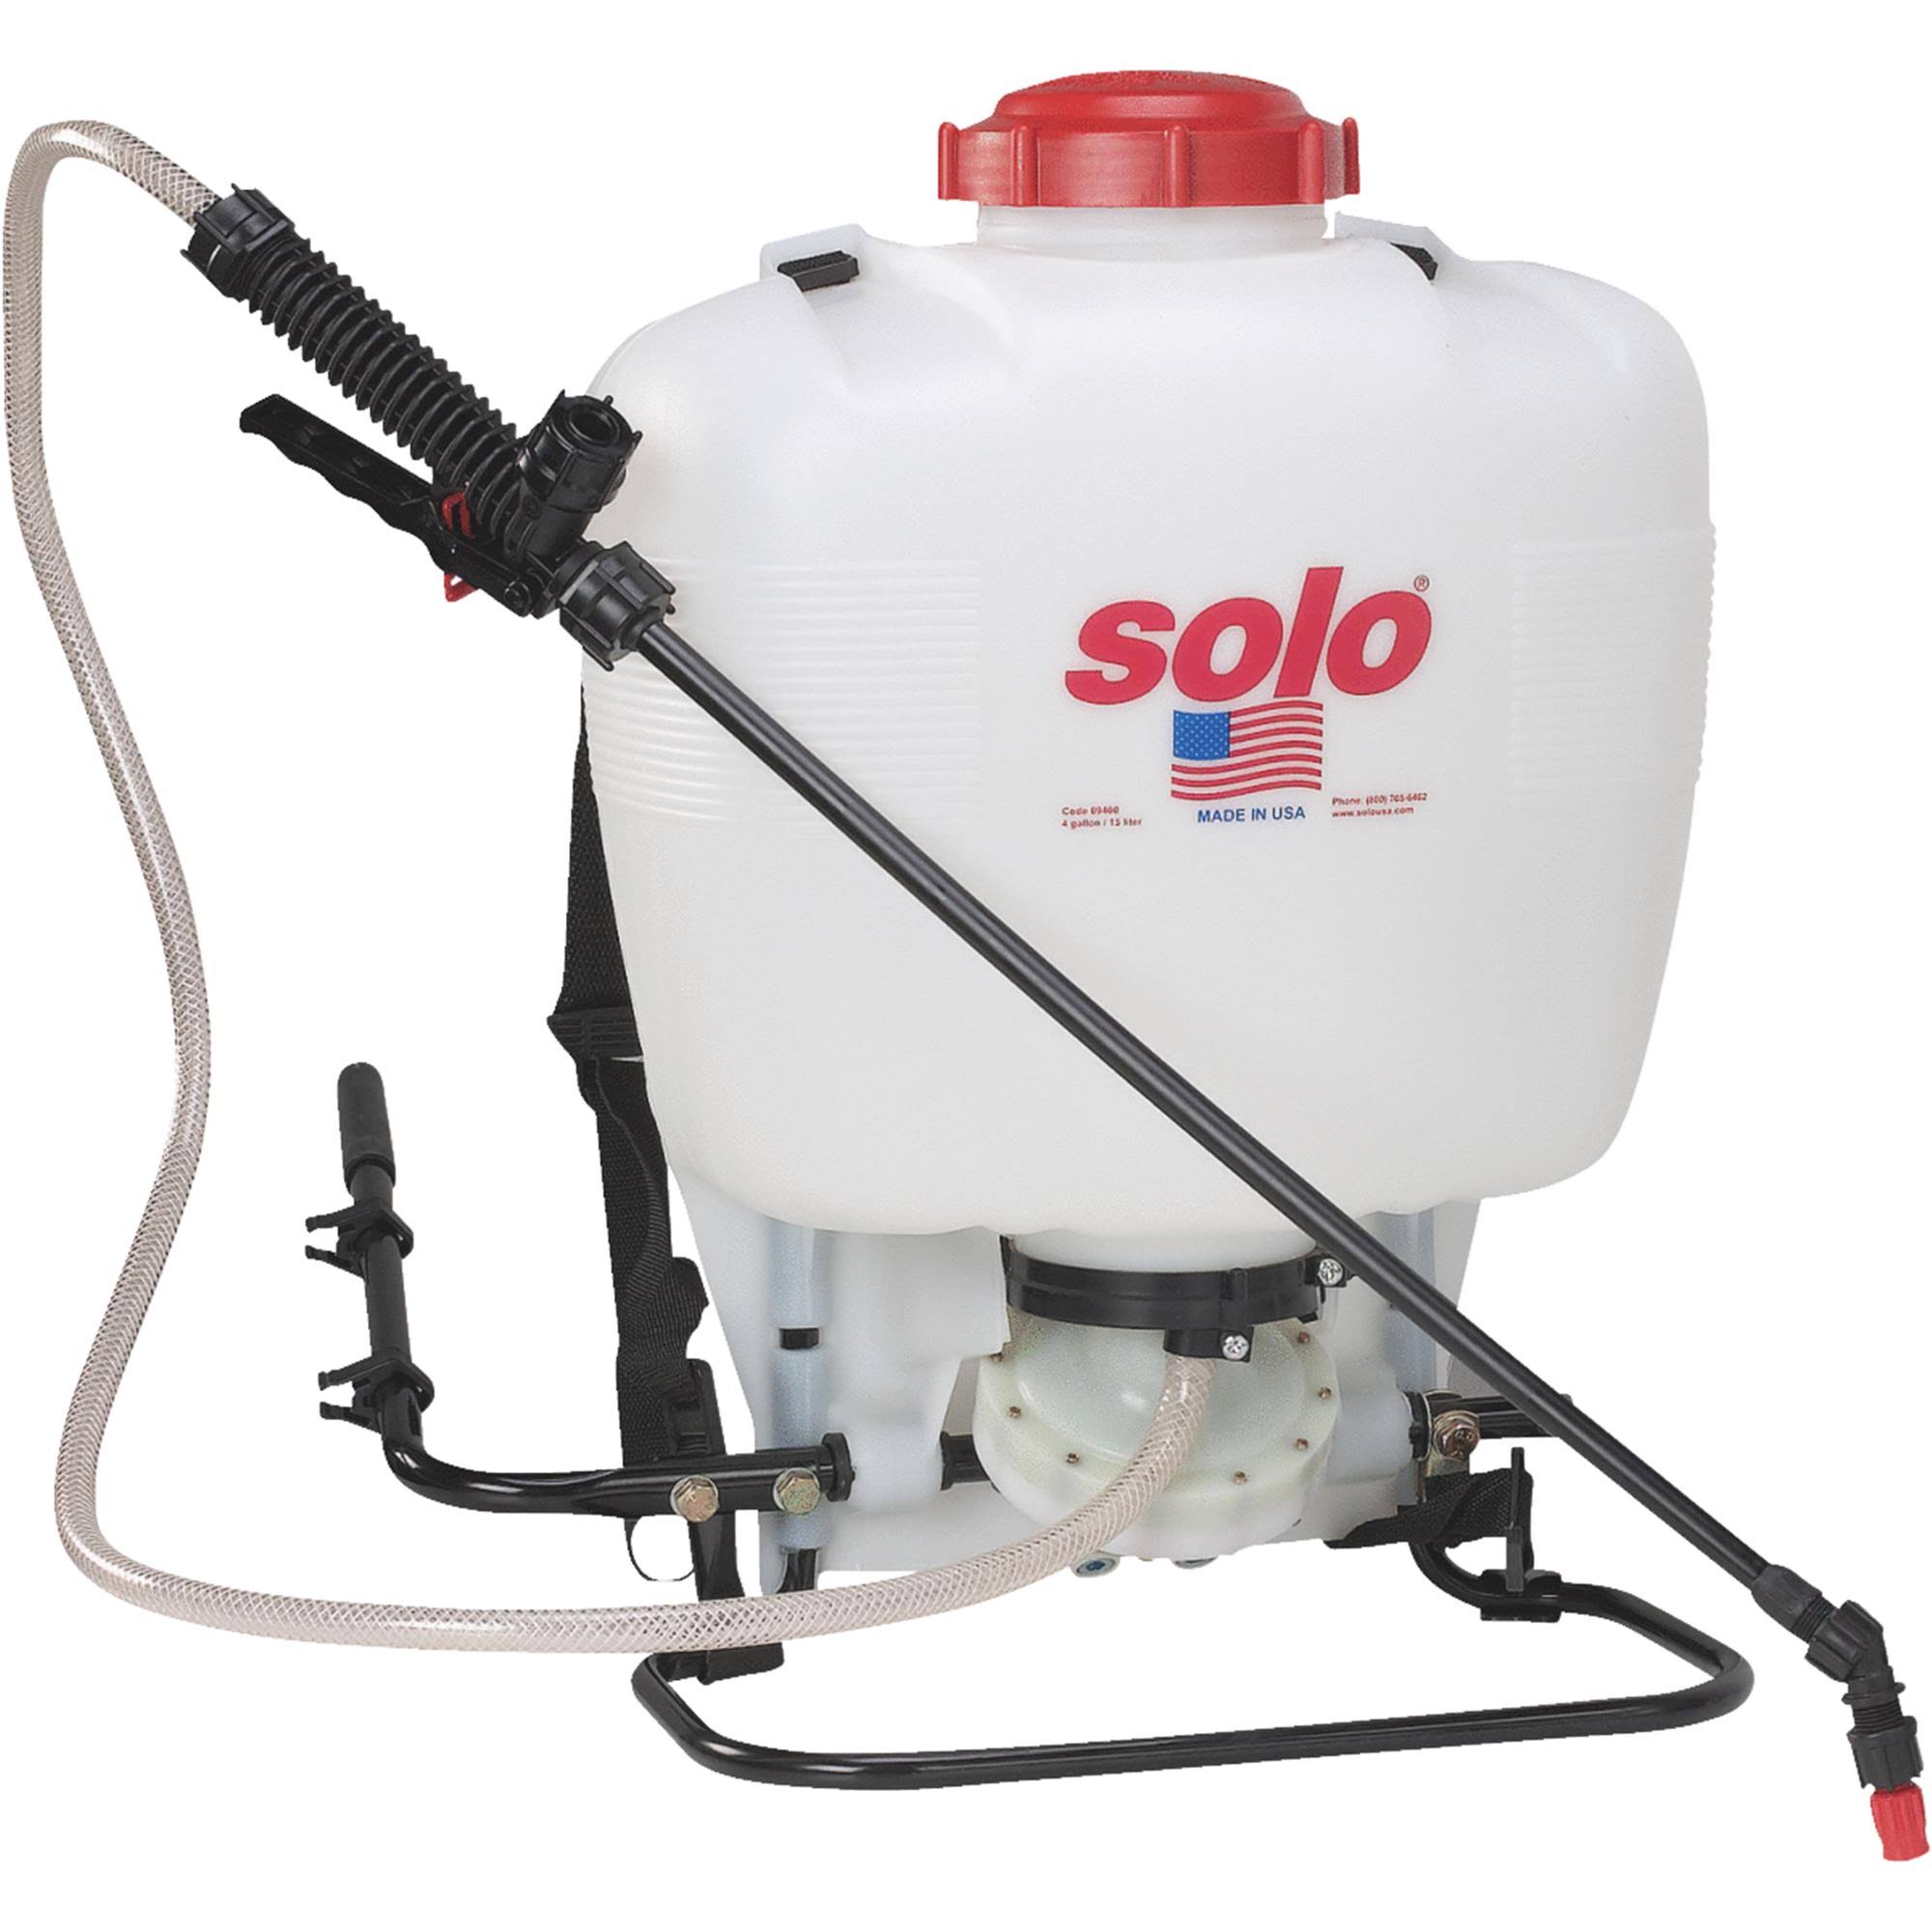 Solo 475-B Professional Diaphragm Pump Backpack Sprayer - 4gal